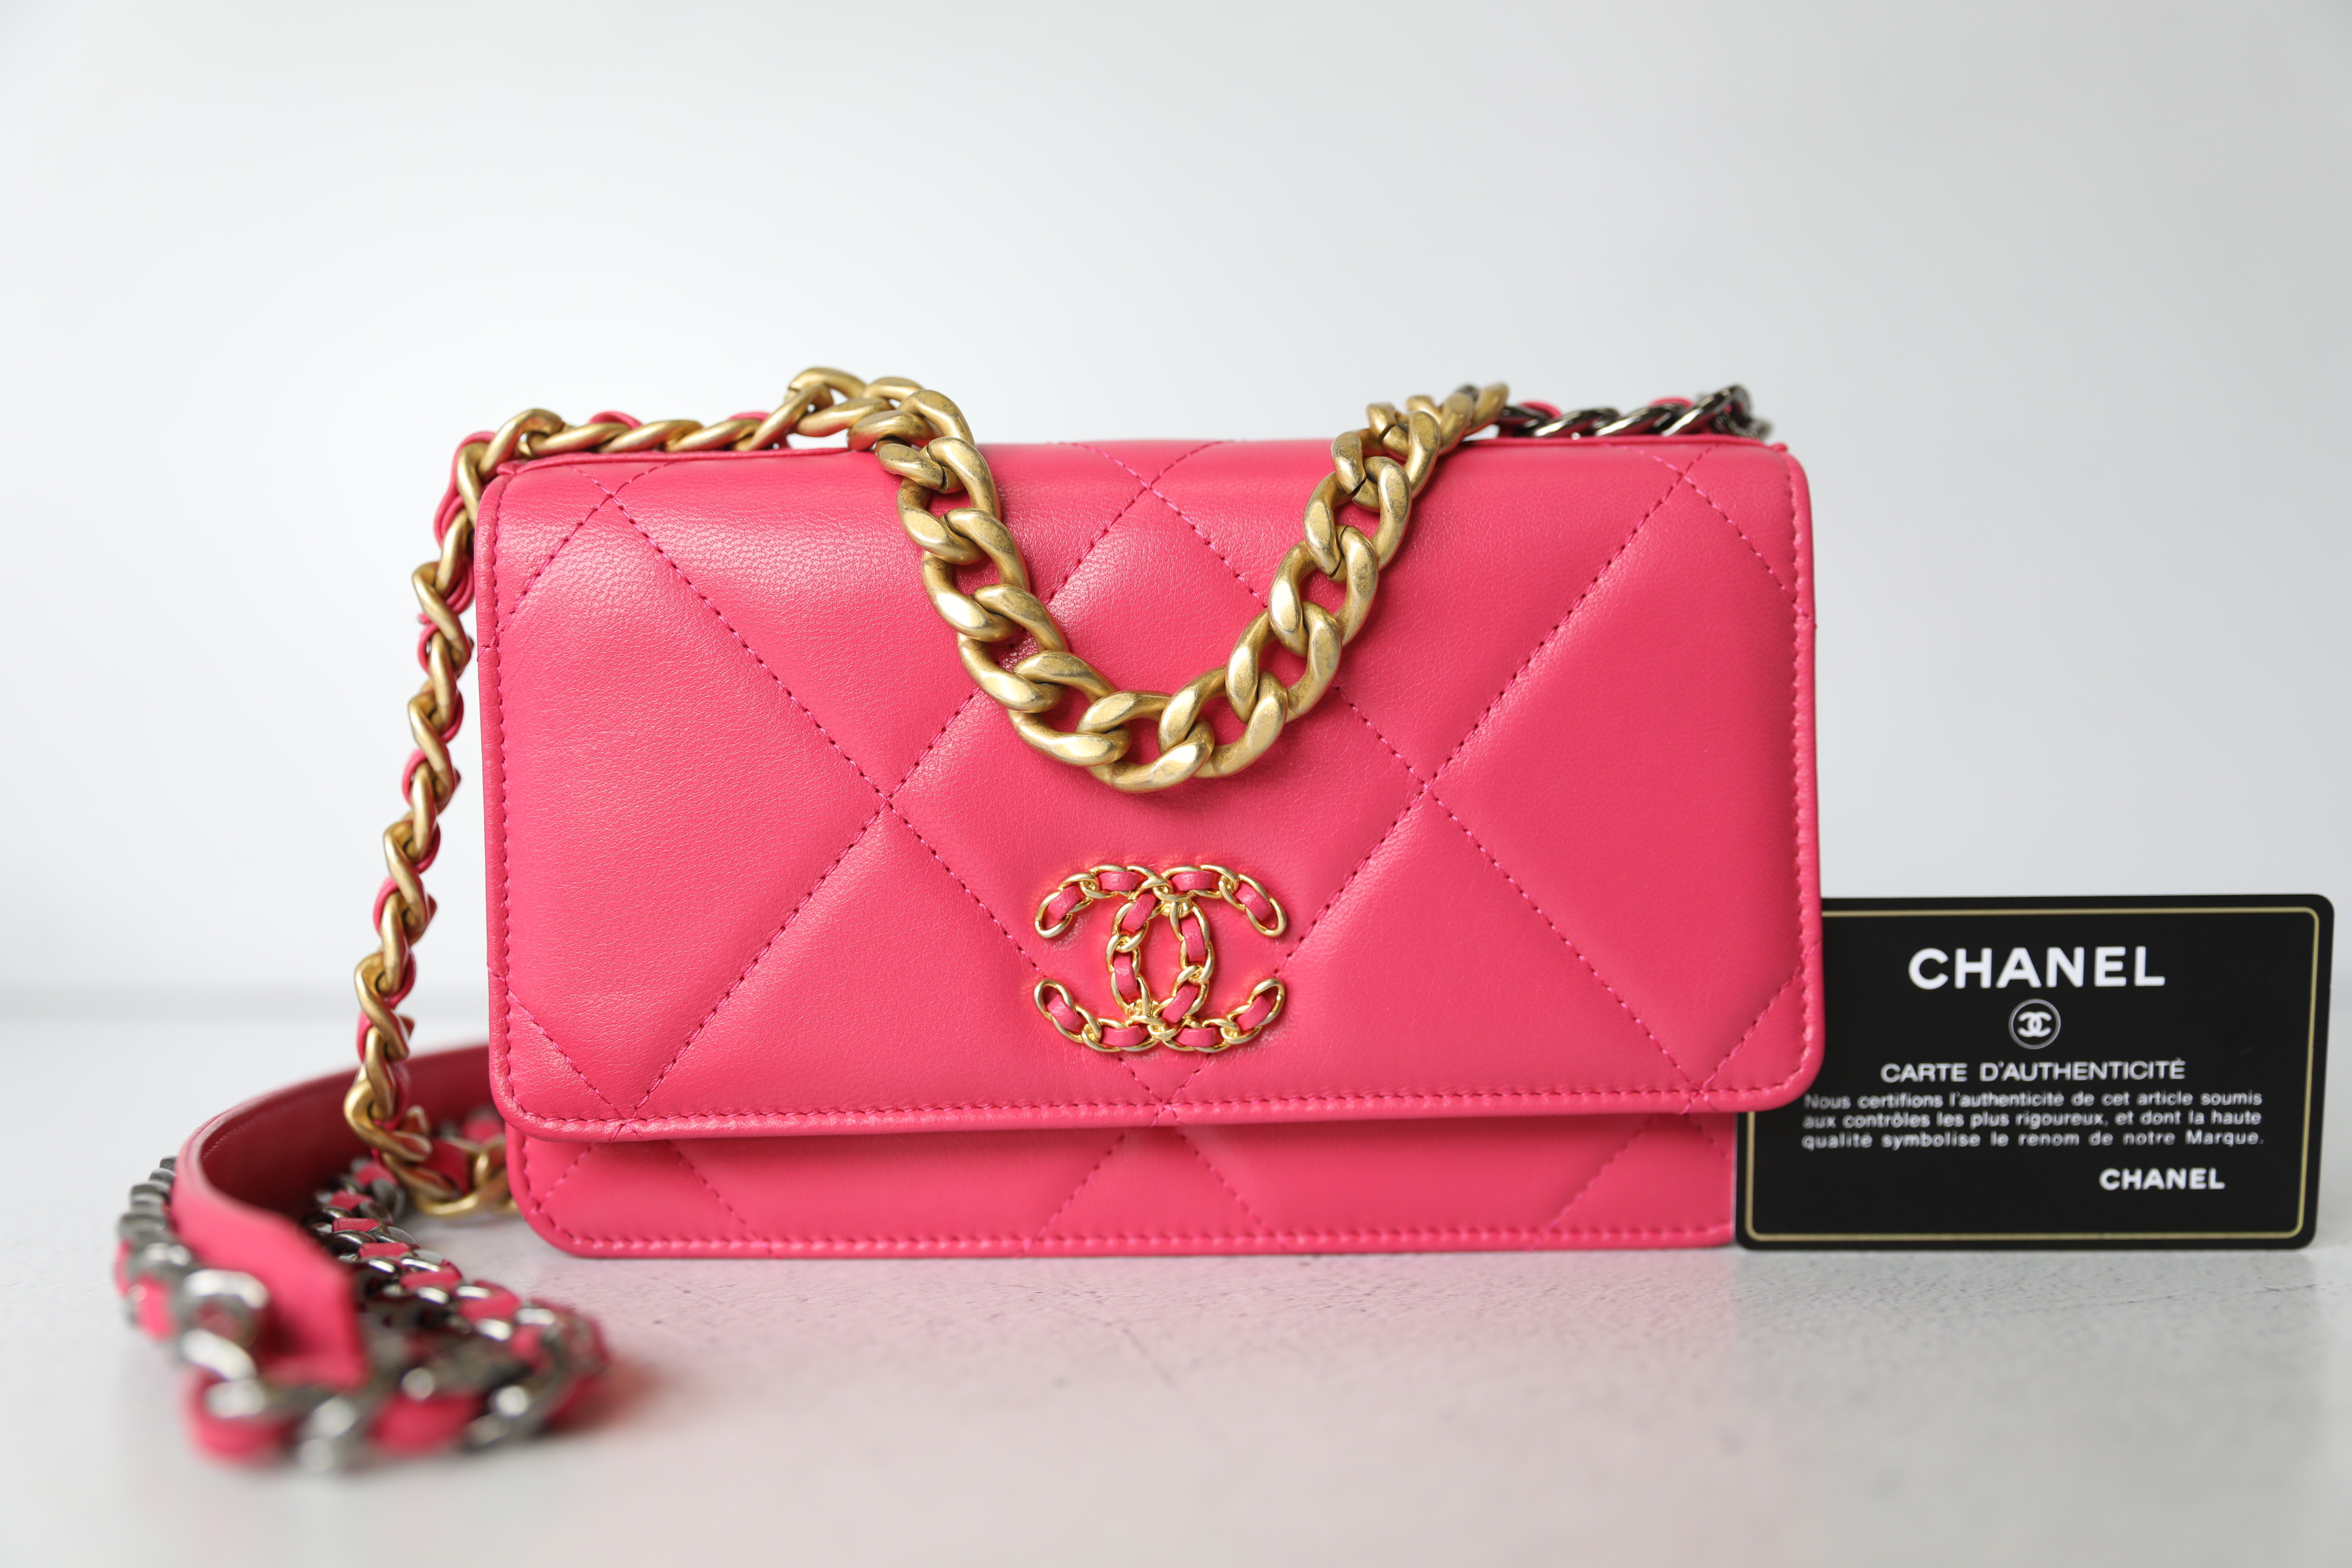 Chanel 19 Wallet on Chain WOC Dark Beige Caramel Lambskin Mixed Hardwa –  Coco Approved Studio